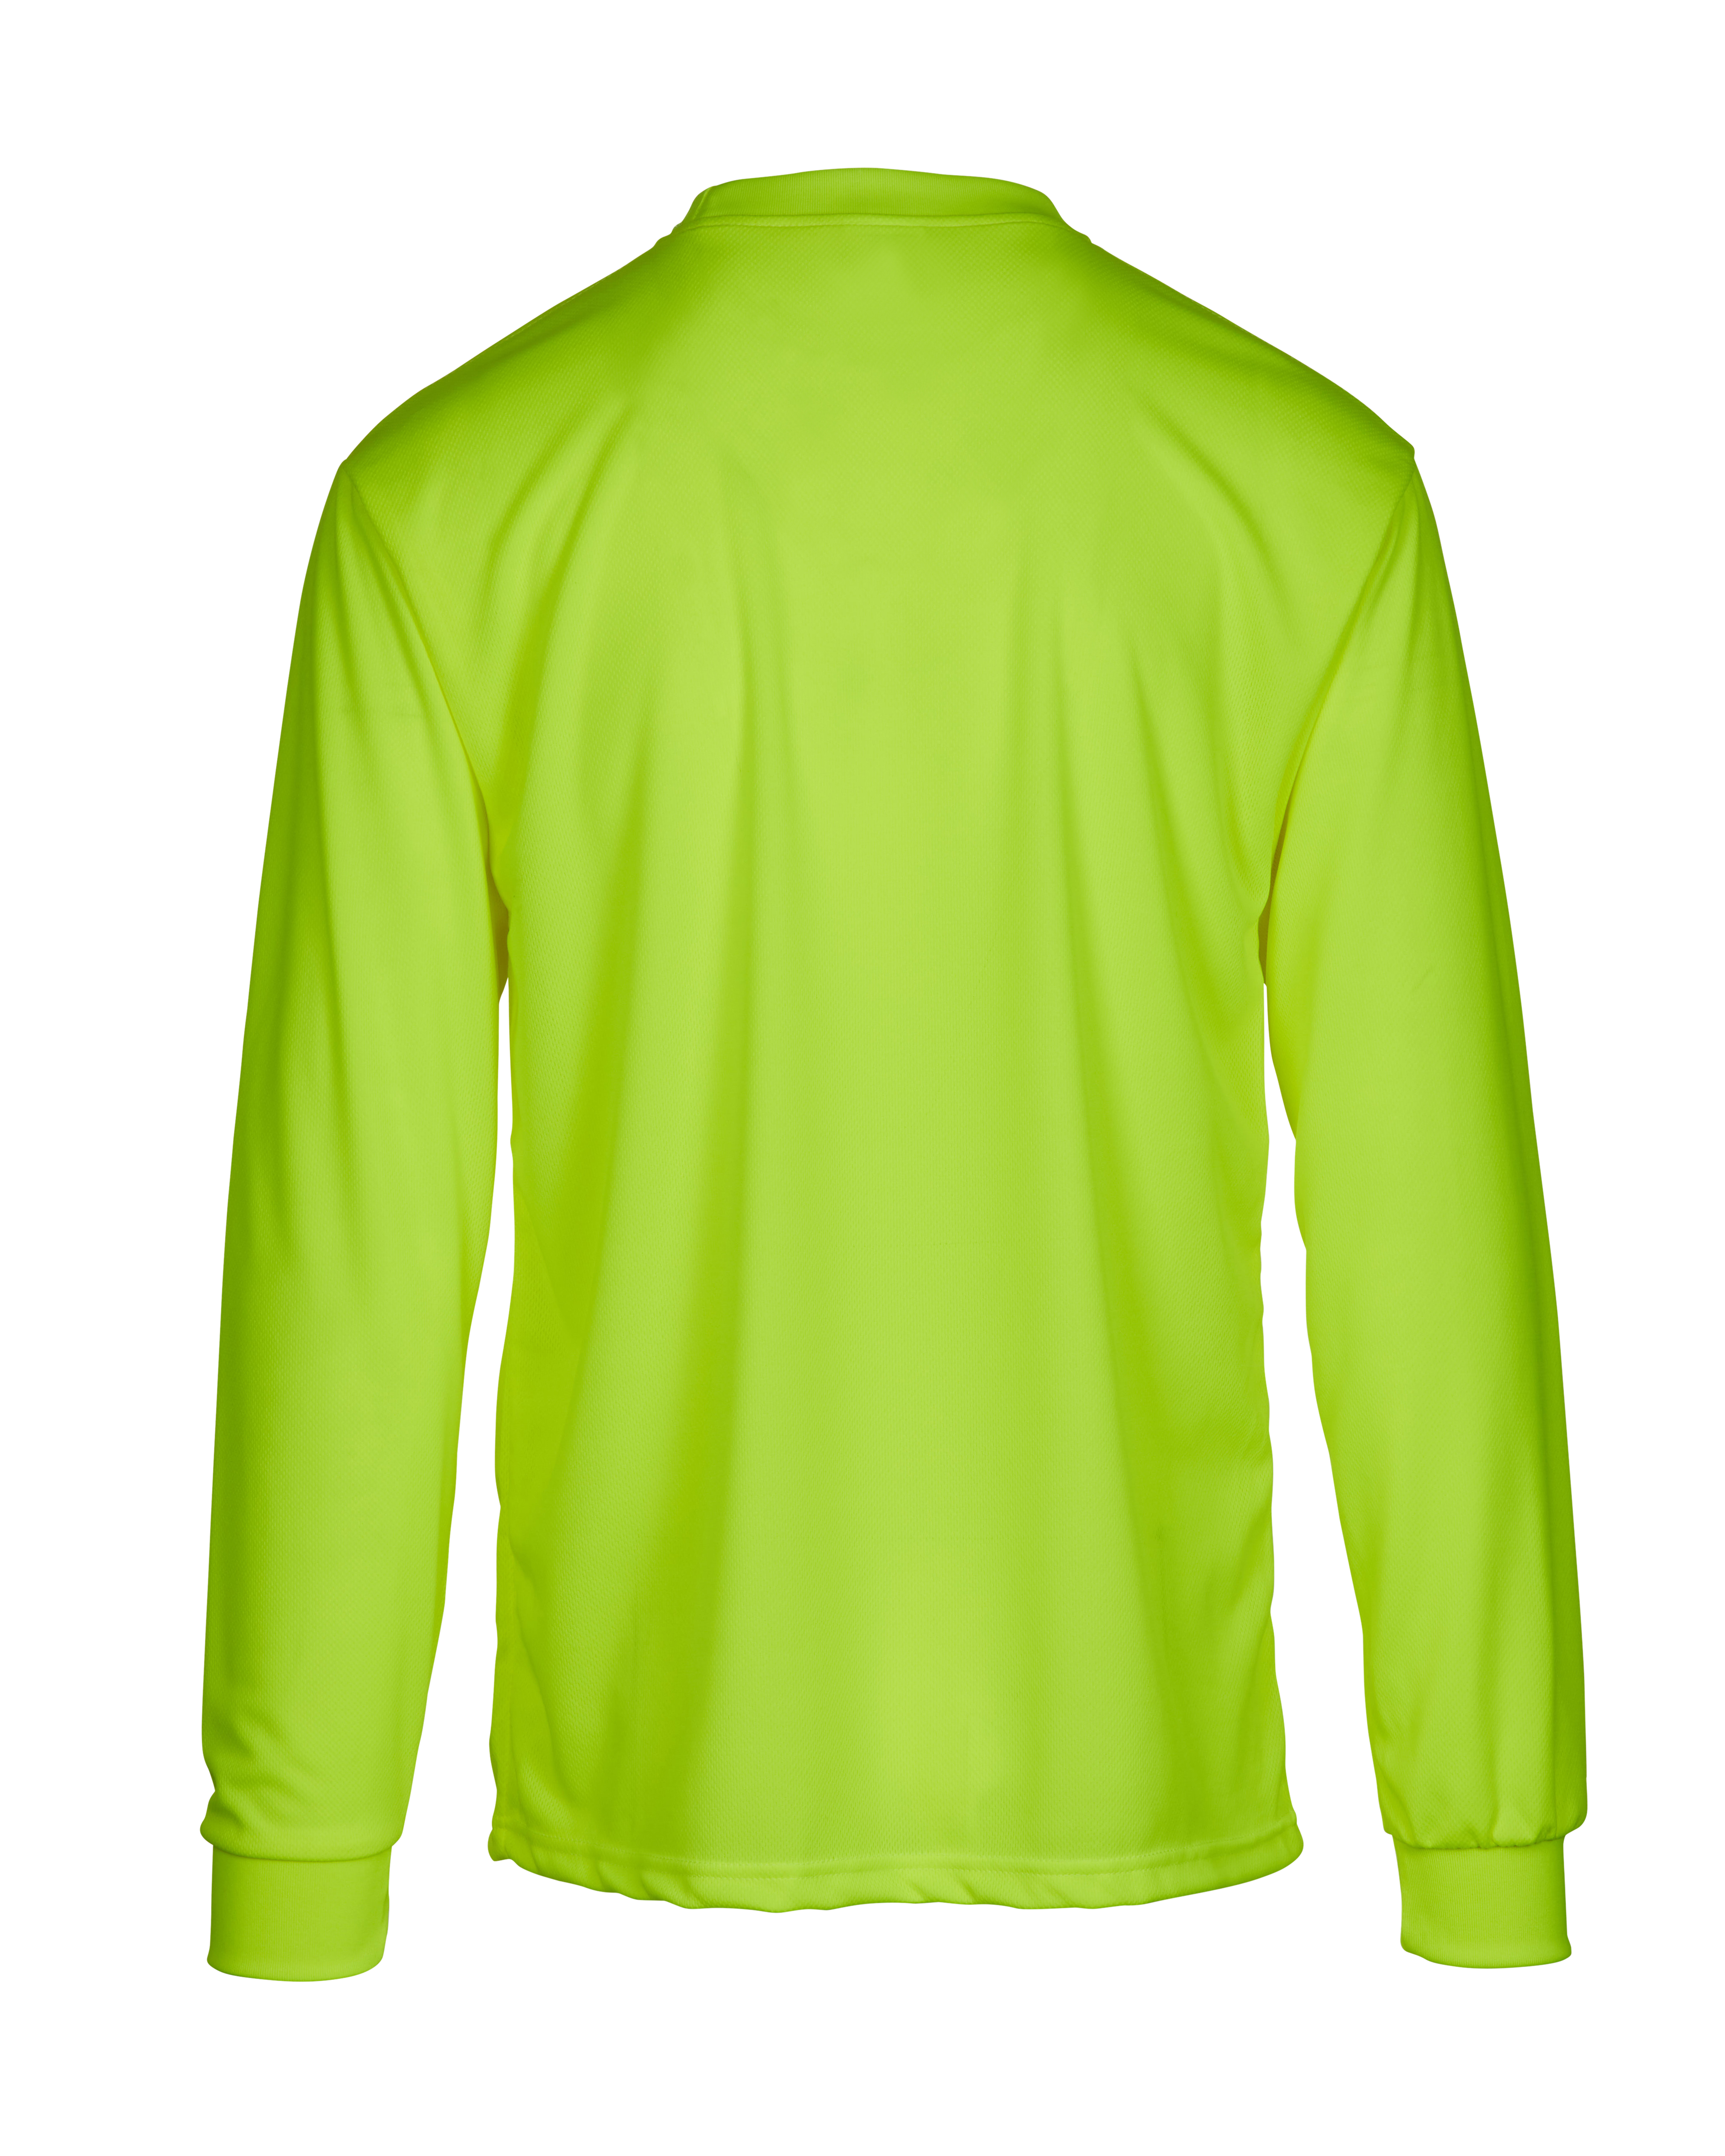 Picture of Max Apparel MAX451 Non Ansi Hi Viz Long Sleeve T-shirt, Safety Green